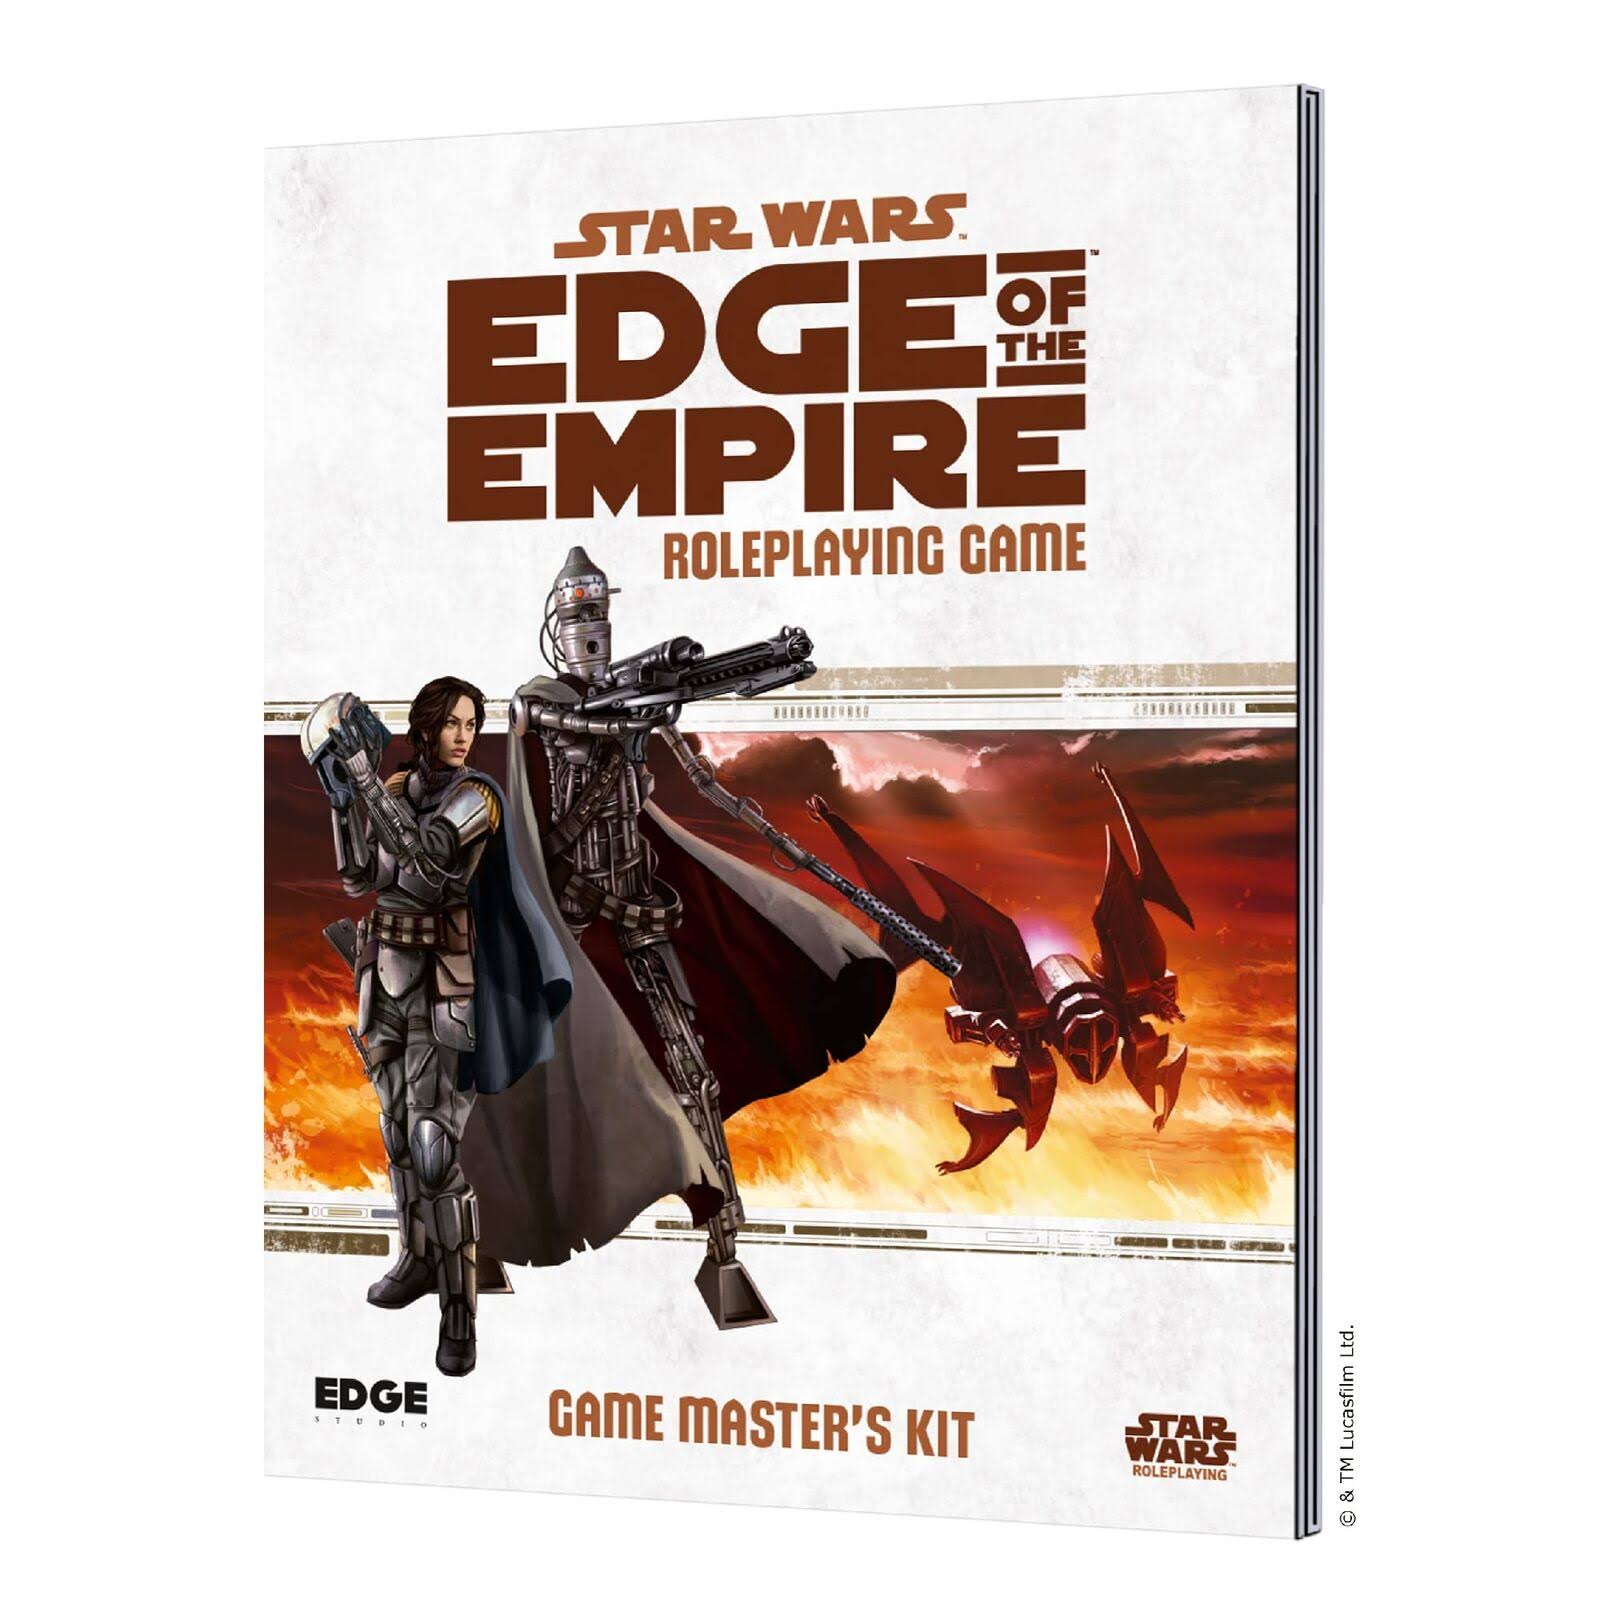 Star Wars Edge of the Empire star wars - edge empire: Game Master's Kit